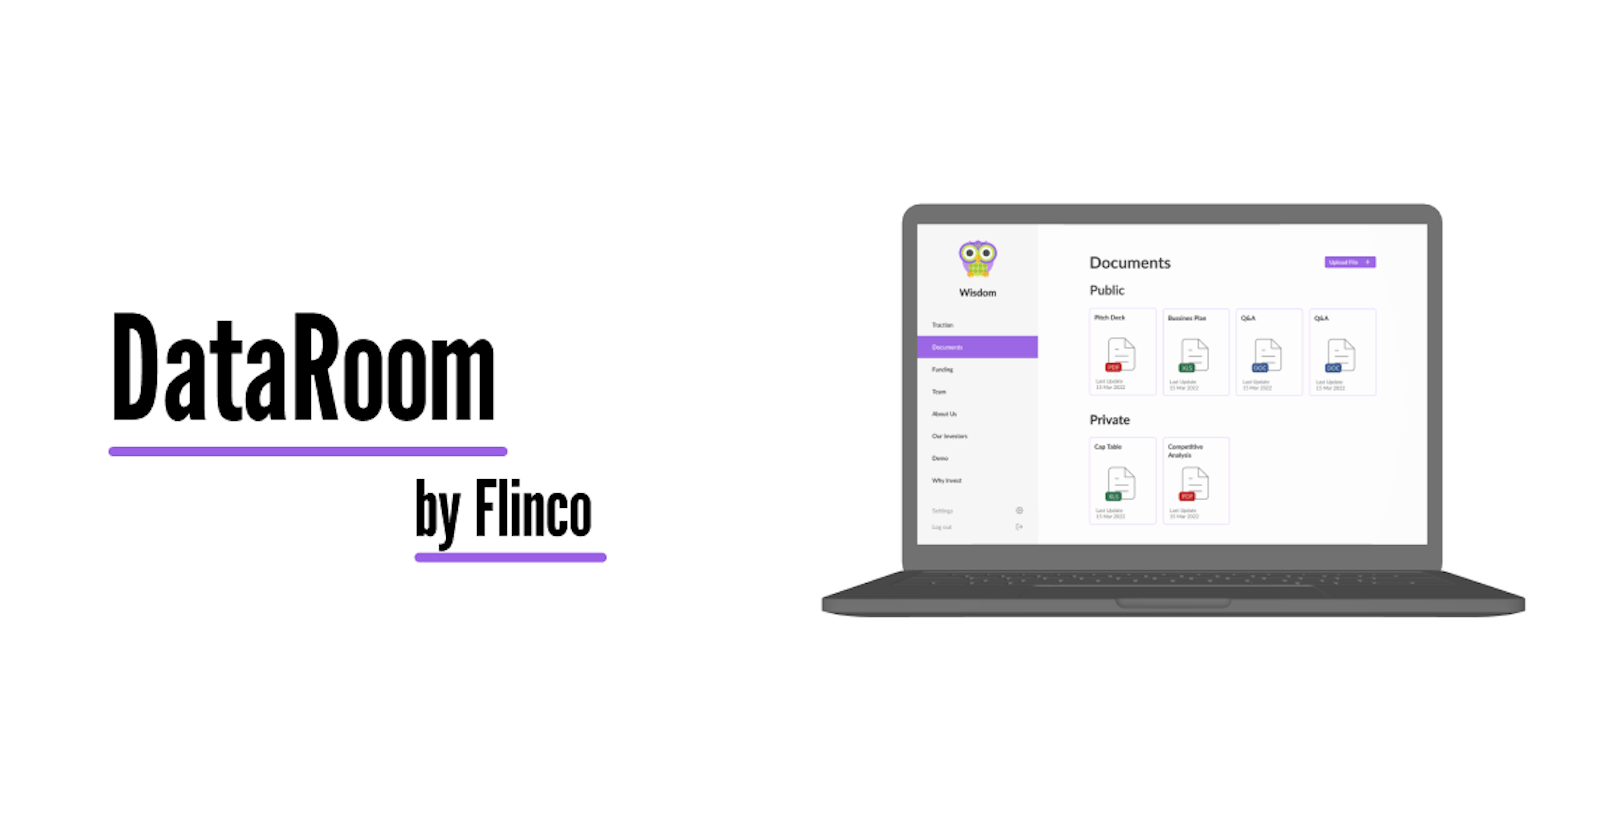 DataRoom by flinco